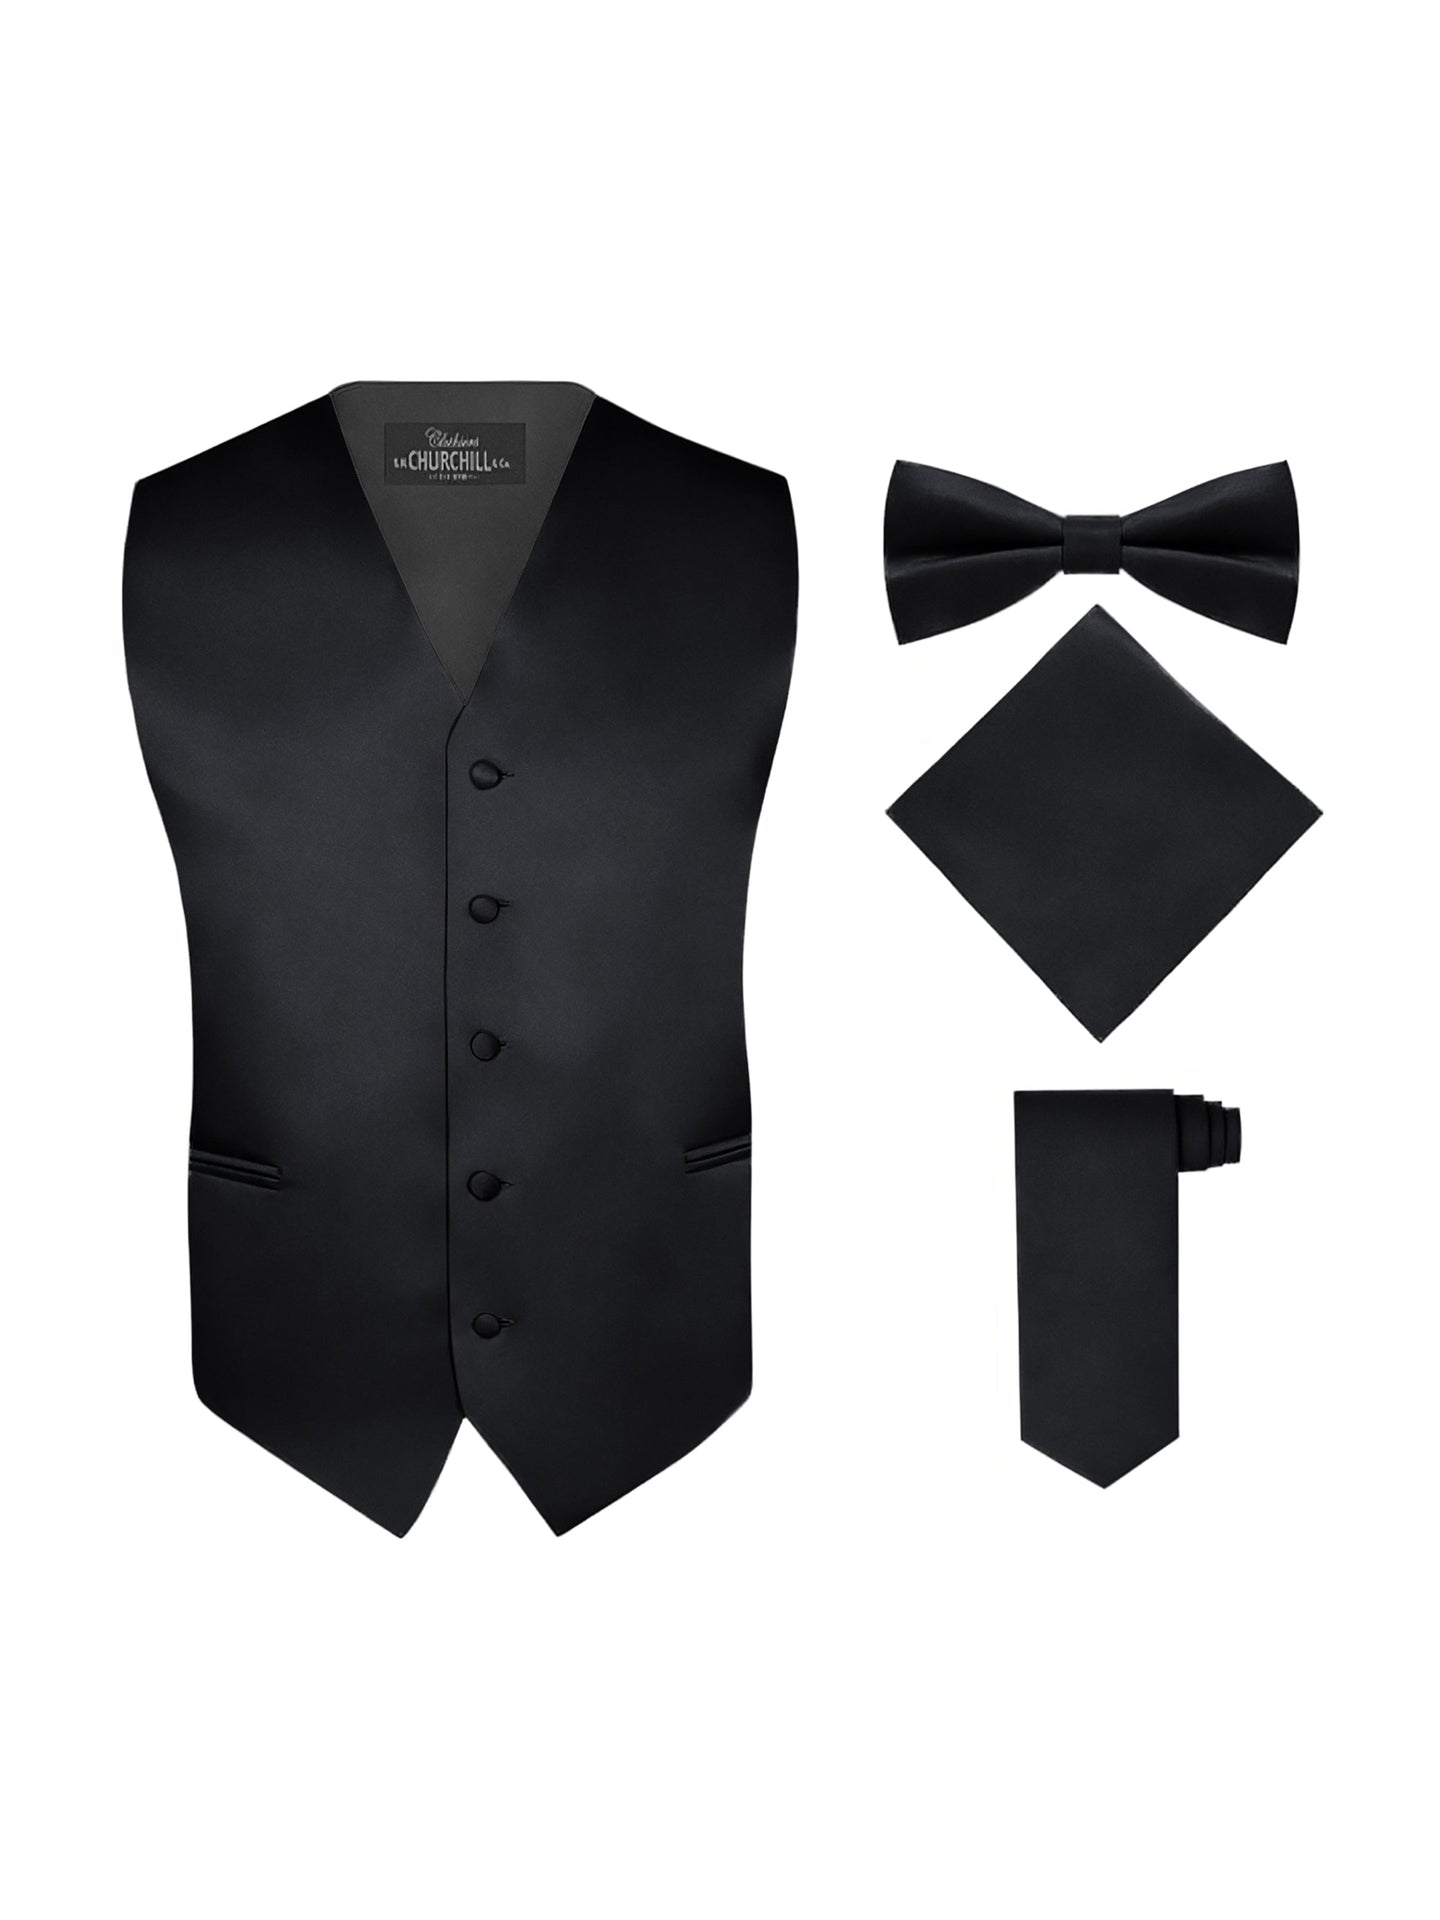 S.H. Churchill & Co. Men's 4 Piece Black Vest Set, with Bow Tie, Neck Tie & Pocket Hankie